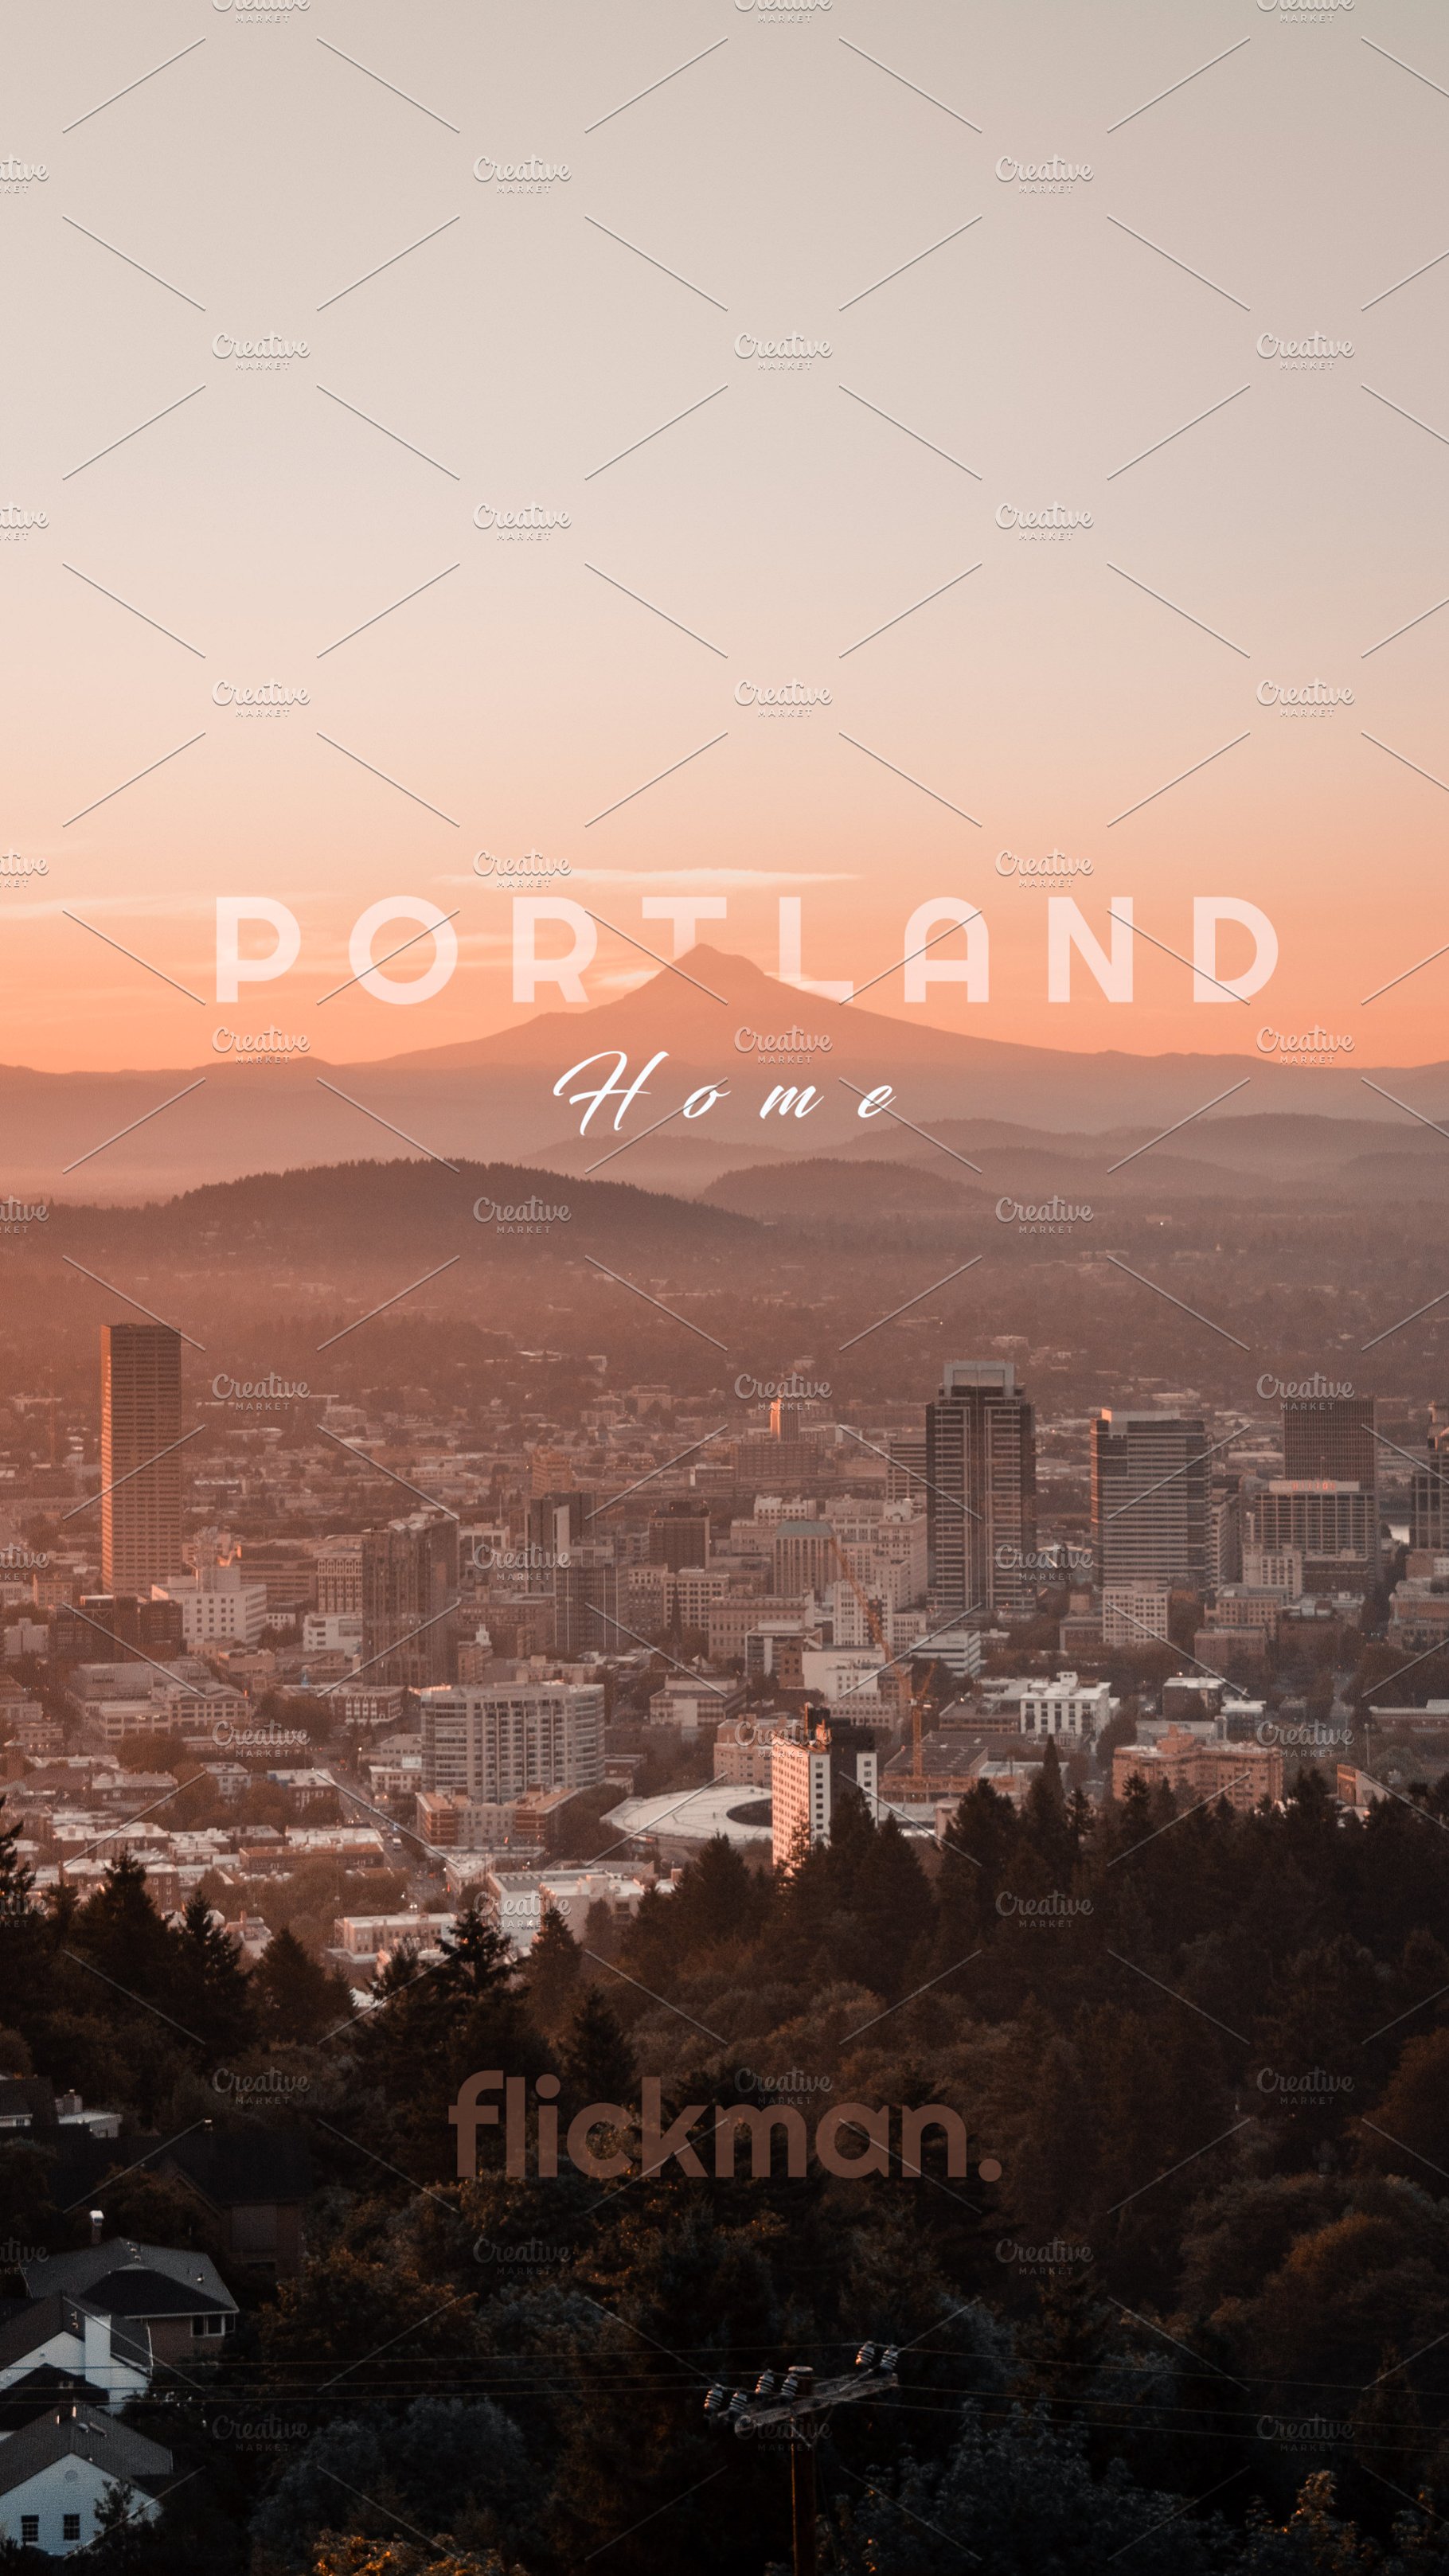 Portland Oregon iPhone Wallpaper Nature Photos Creative Market